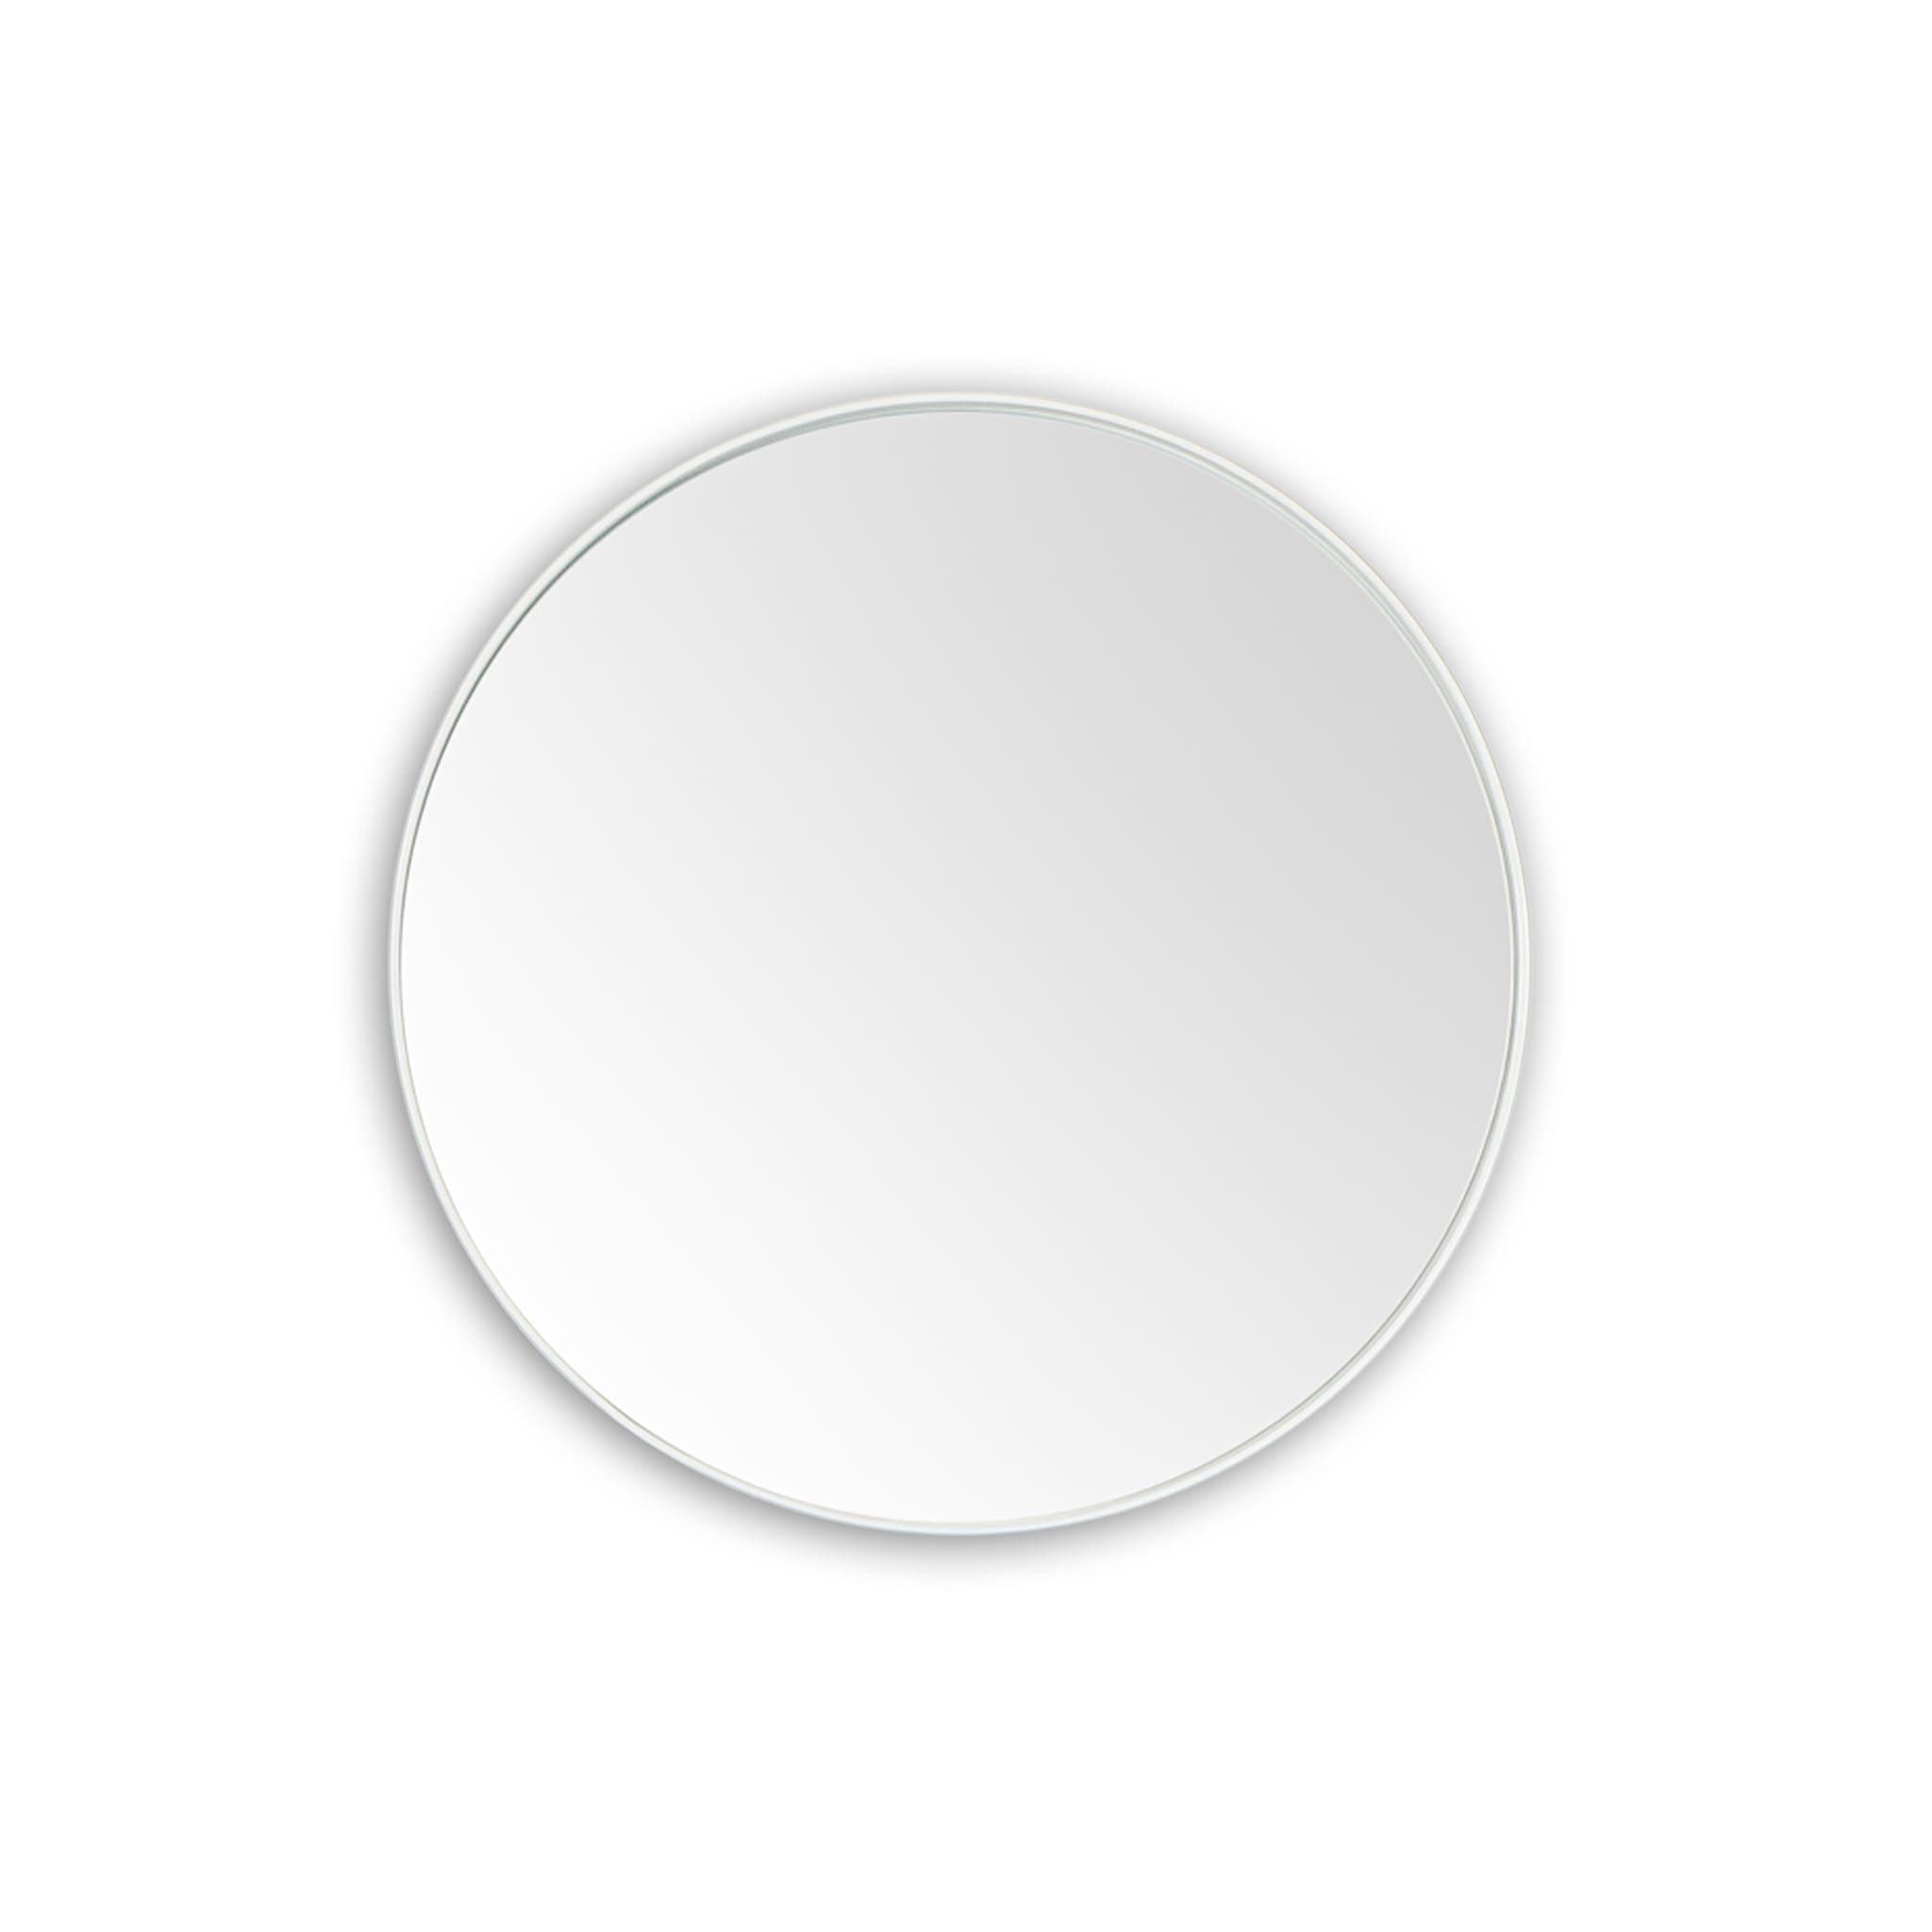  Bathroom Round Mirror Homelero 24"  #size_24"  #color_white